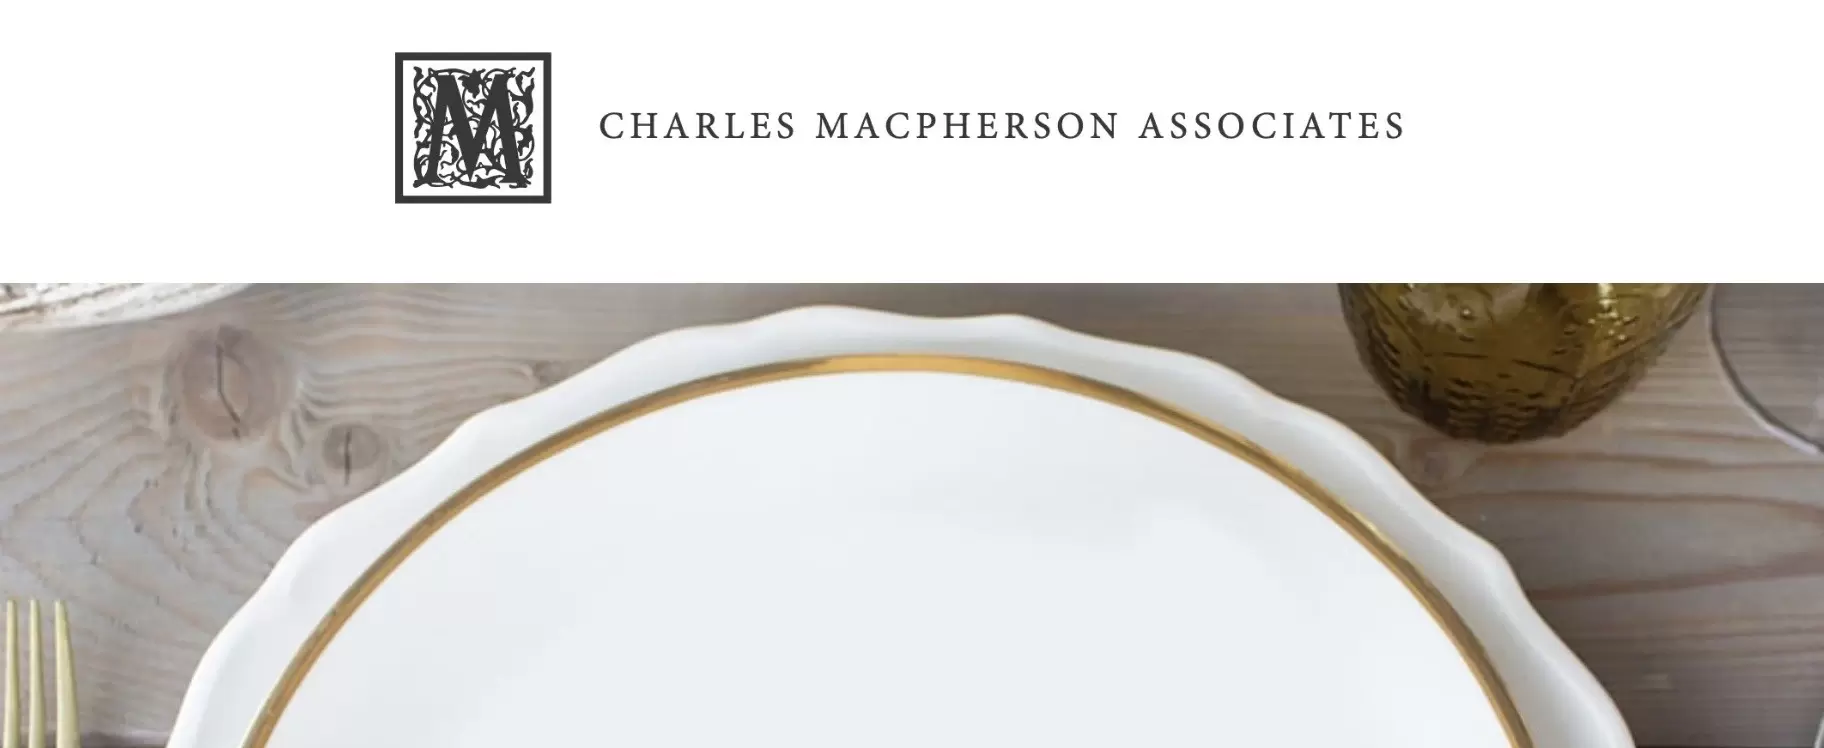 Charles MacPherson Associates: Company Profile & Reviews